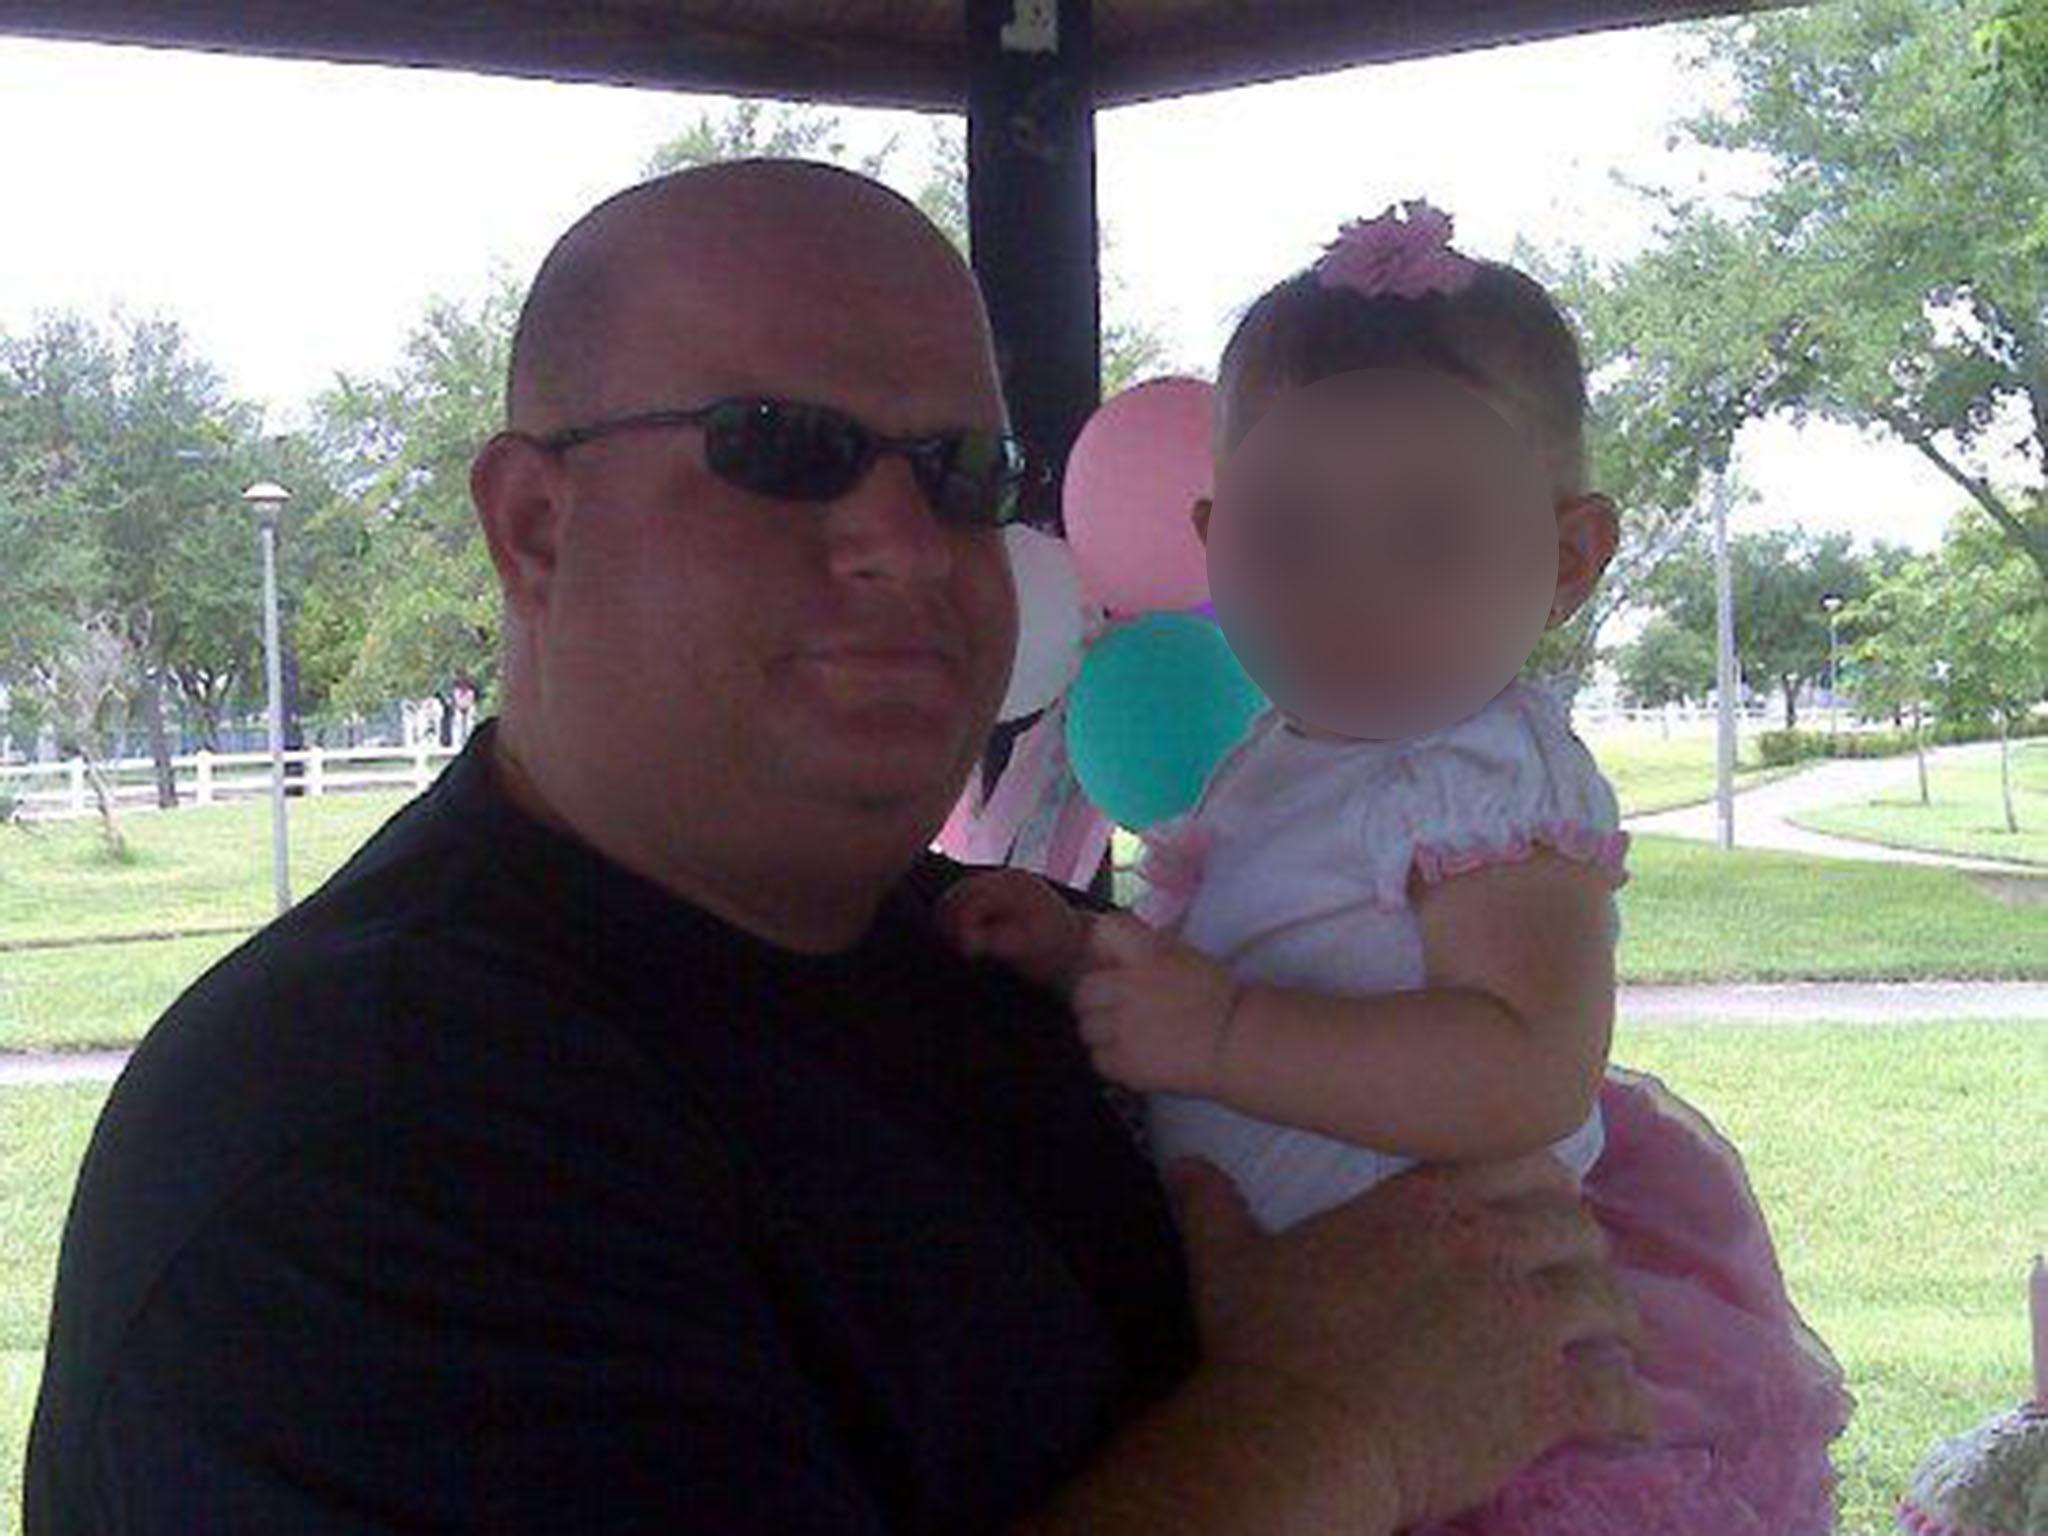 Aaron Feis ‘died a hero’ in the Florida shooting